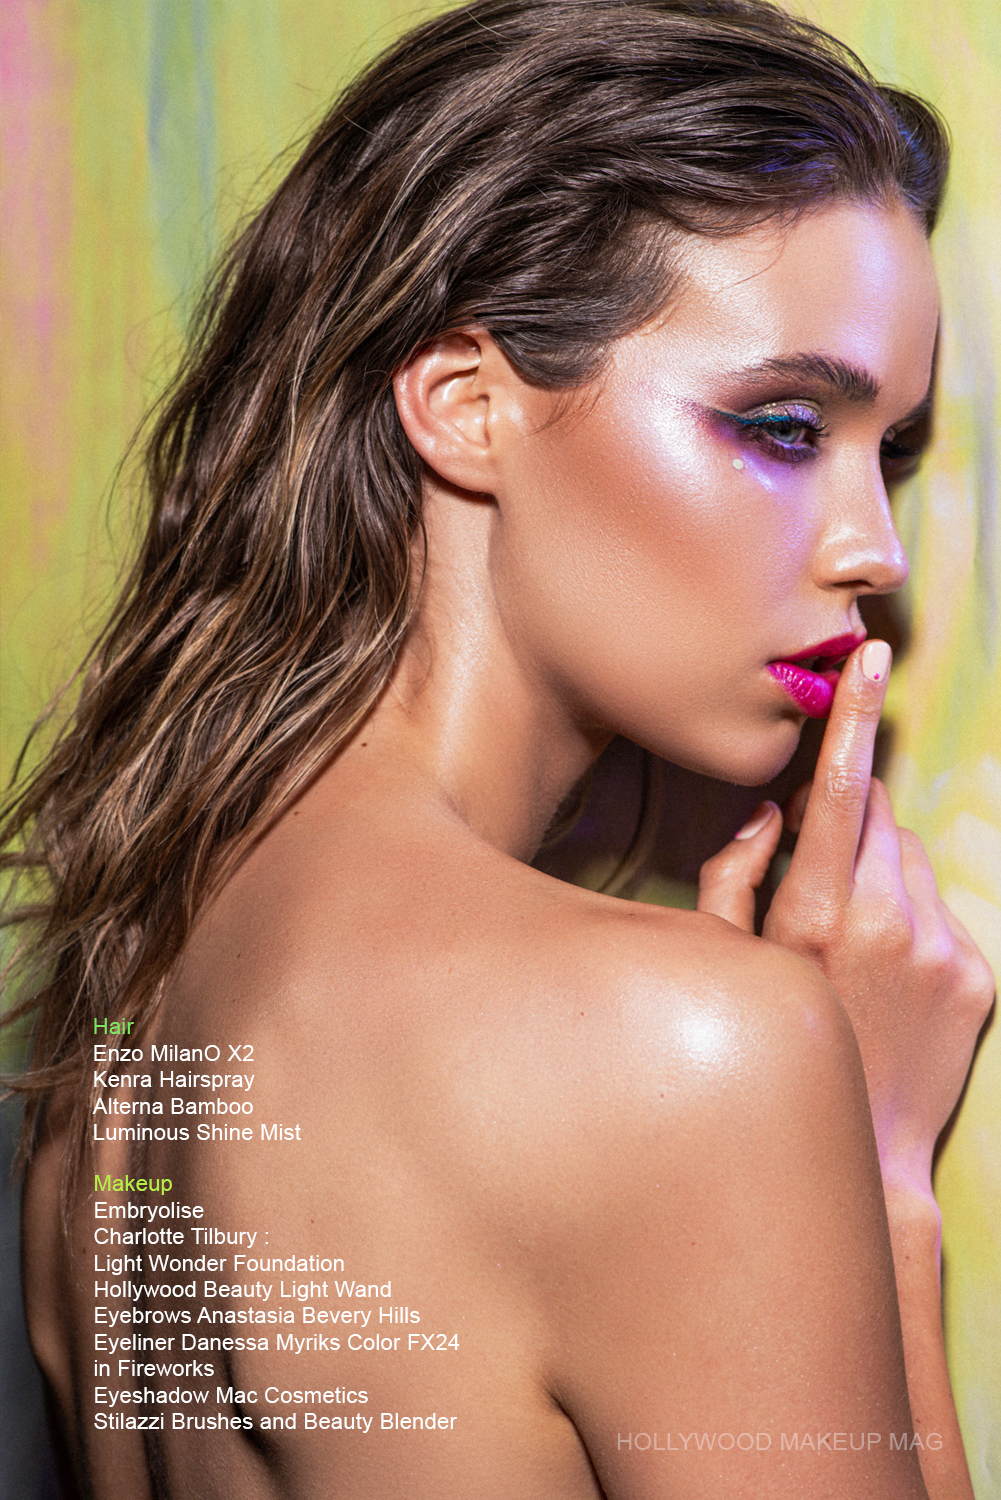 3-Beauty-Editorial-Summer-Makeup-Glowing-skin-sexy-magazine-by-Agne-Tomas-Skaringa.jpg